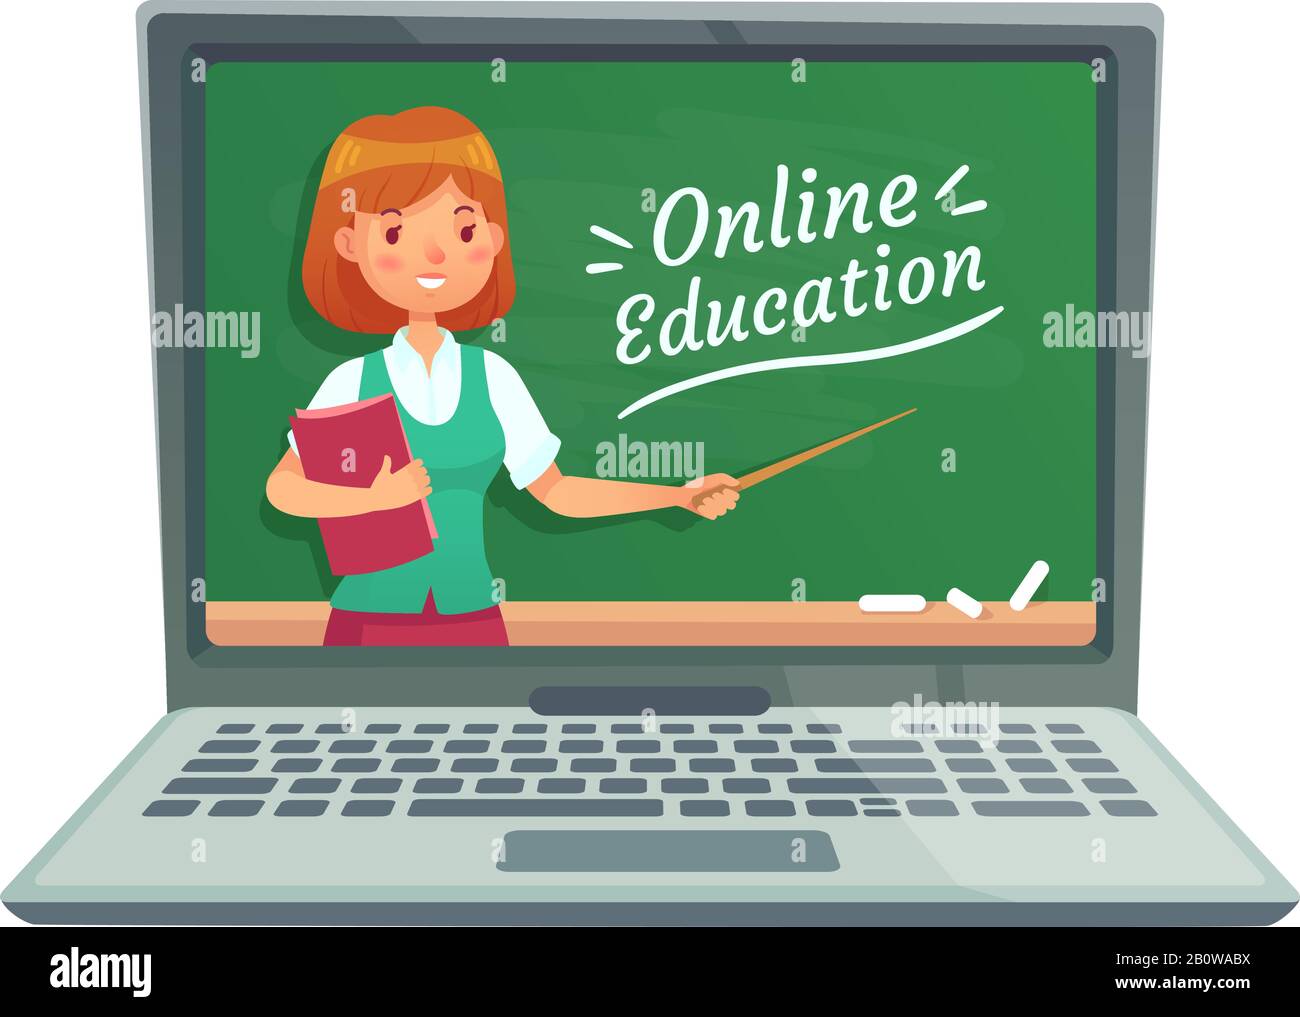 Online education with personal teacher. Professor teach computer technology. School blackboard isolated on laptop vector illustration Stock Vector